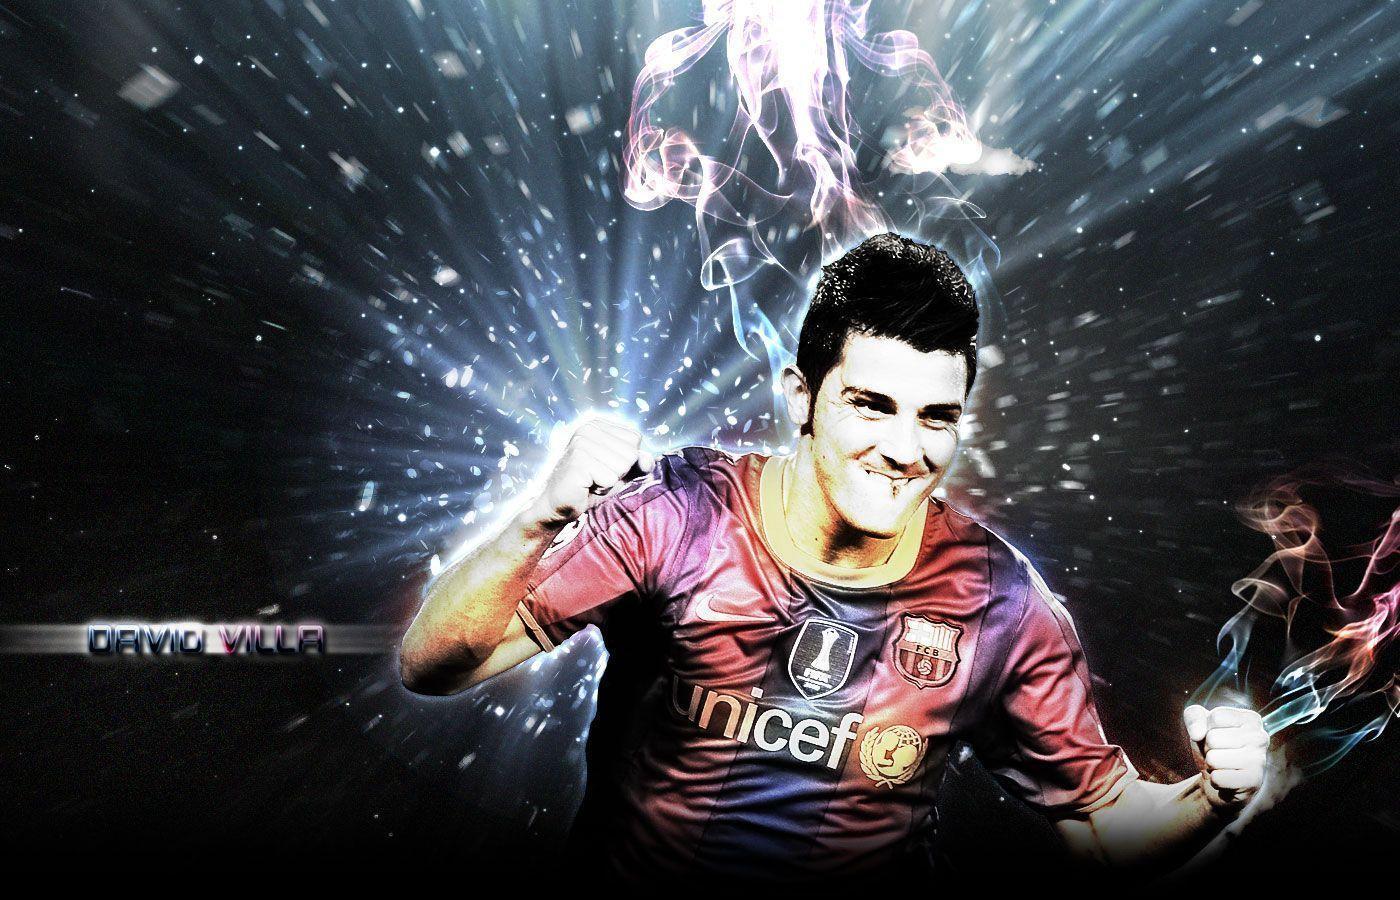 image For > David Villa And Messi Wallpaper 2012